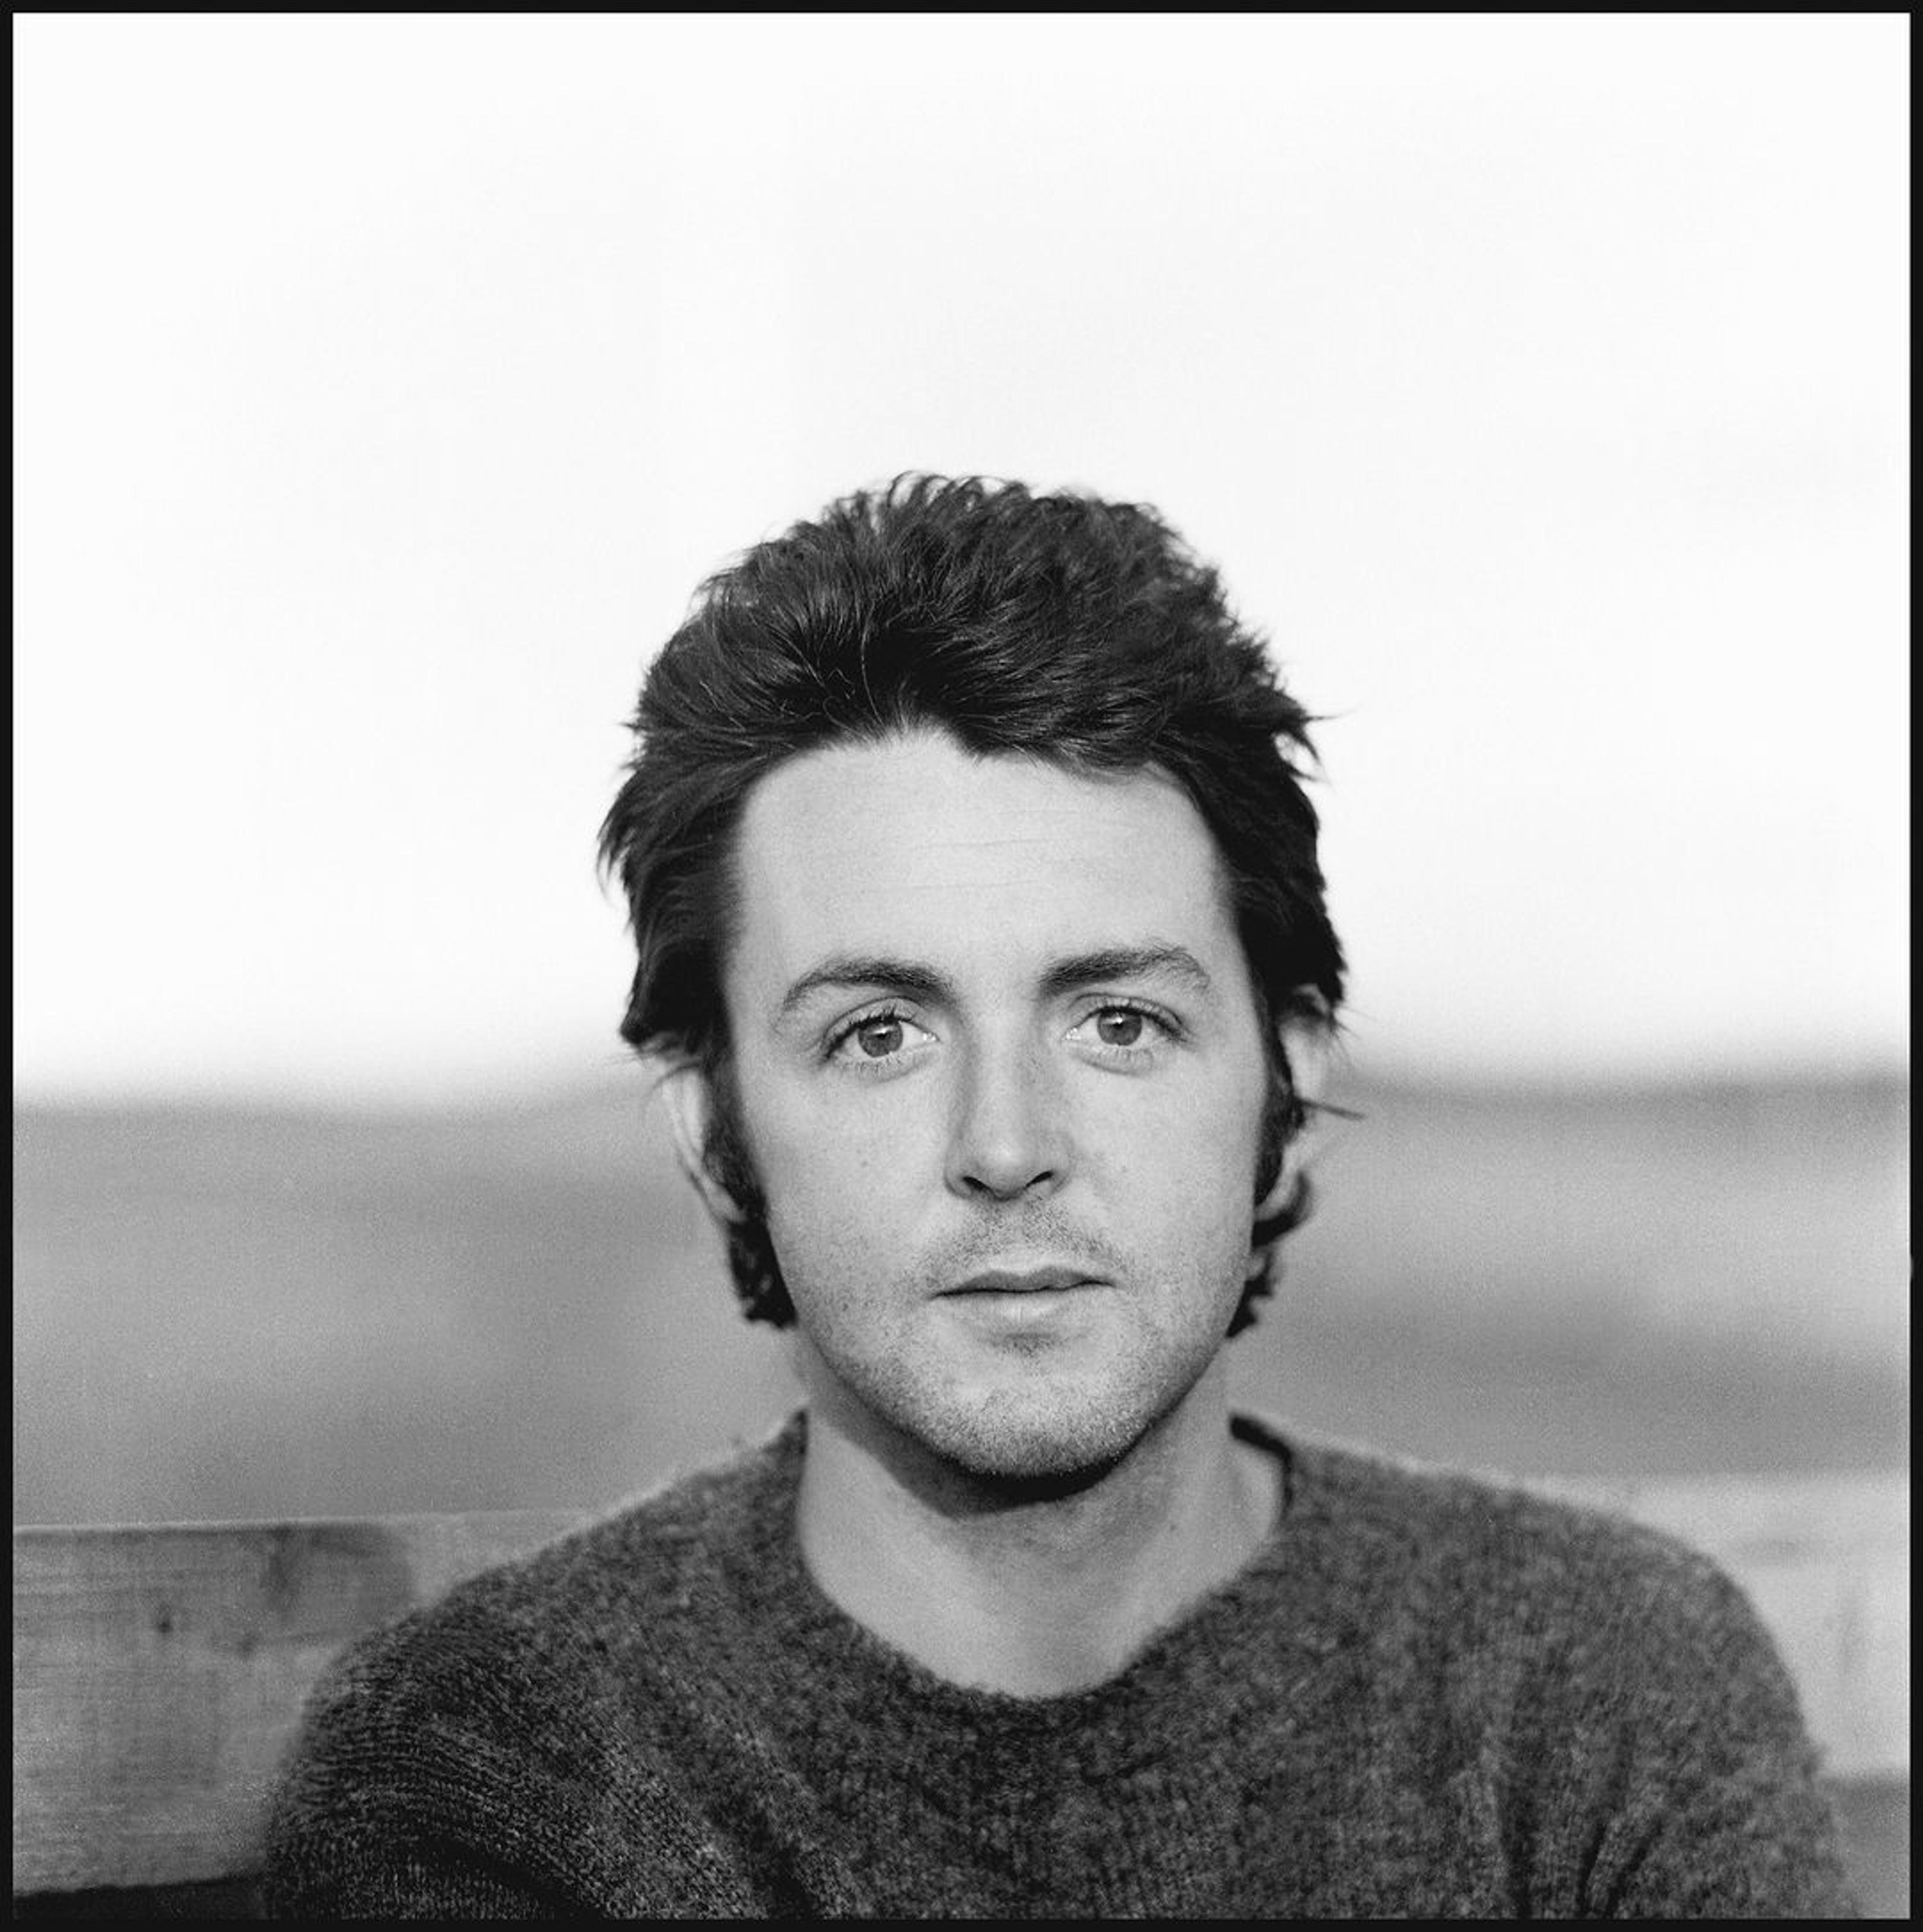 Black and white portrait of Paul taken by Linda McCartney